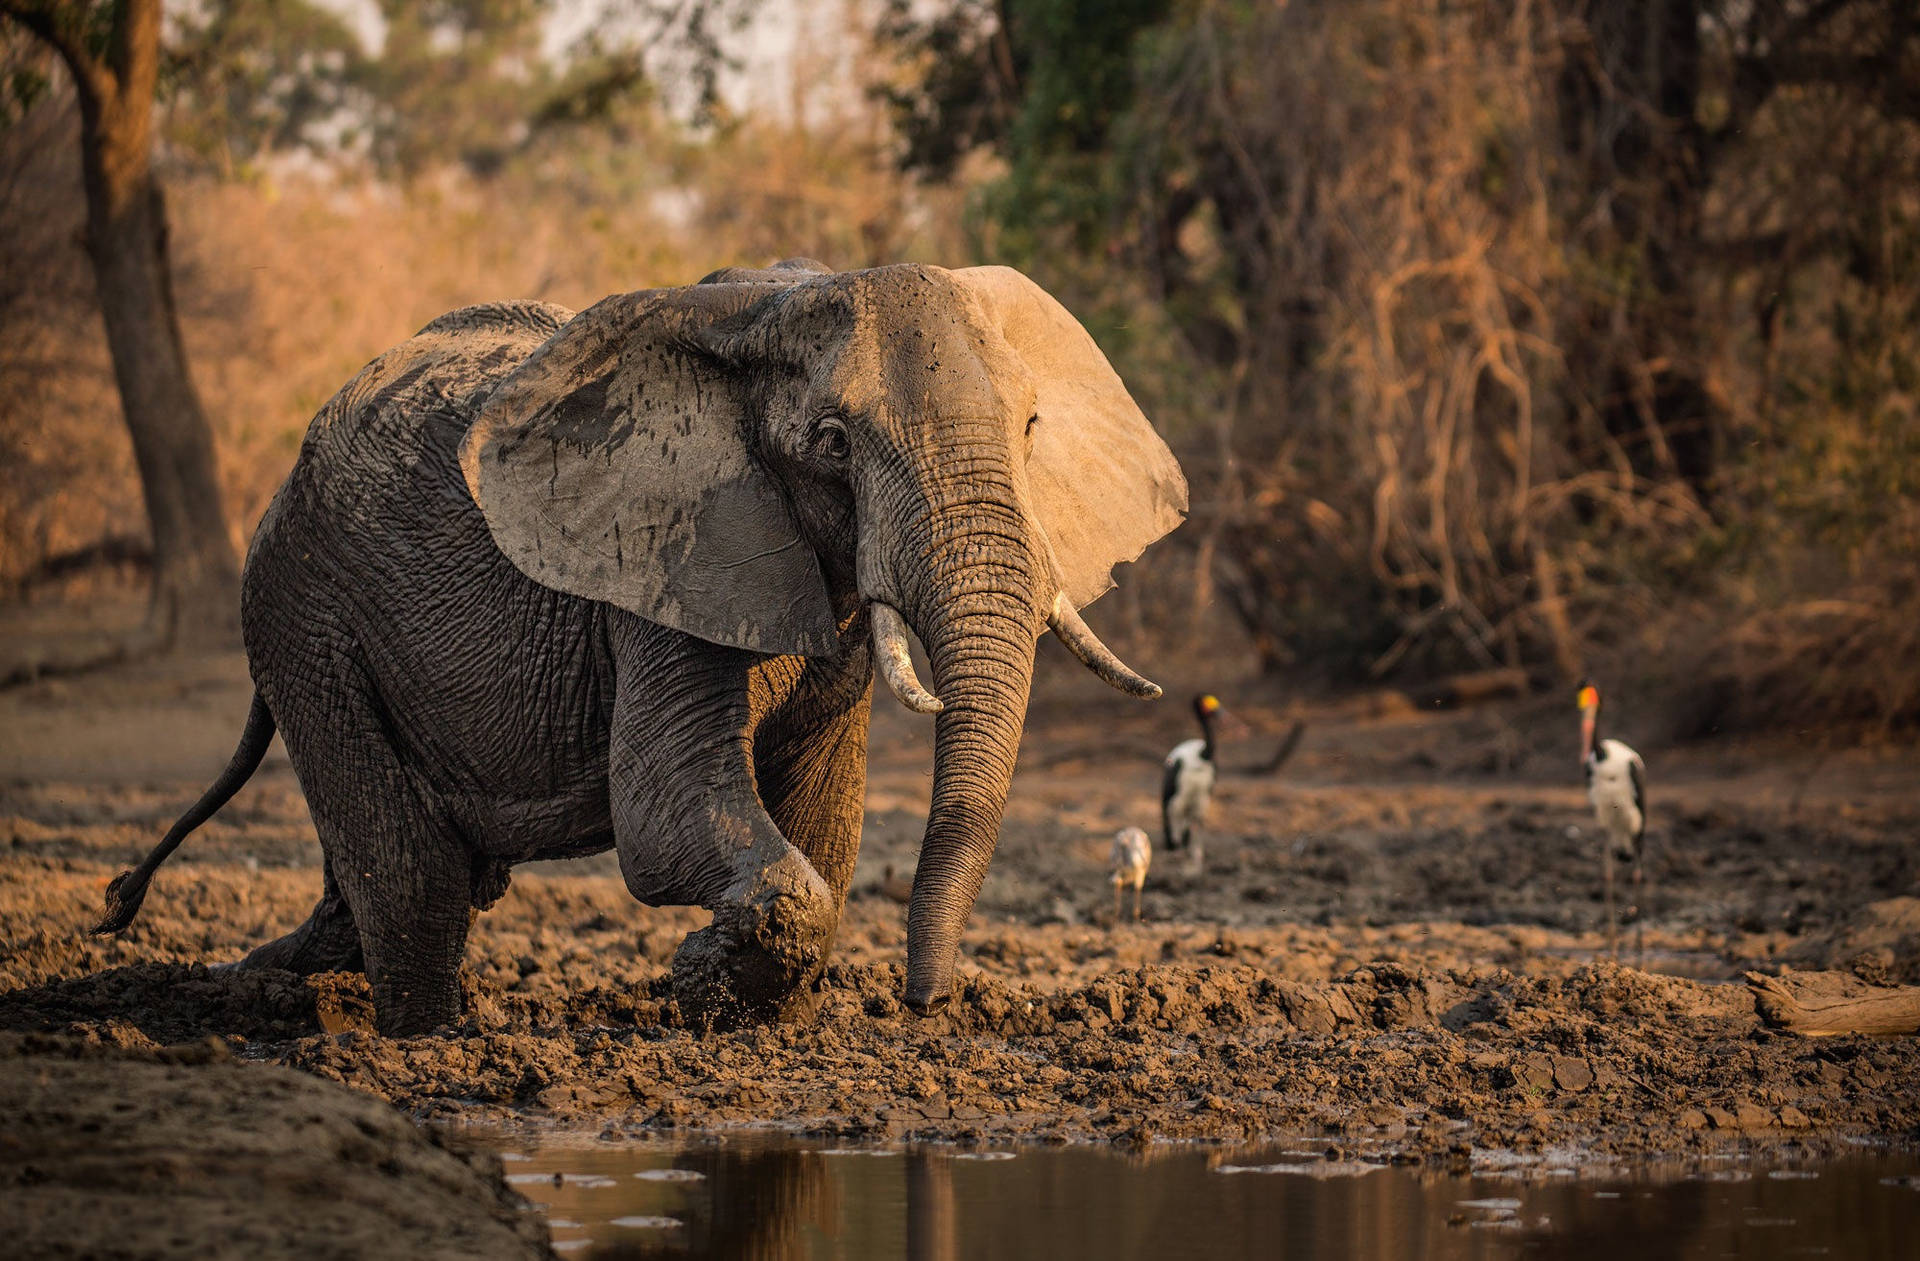 Diverse Wildlife Gathered Around A Mud Pool In The African Savannah